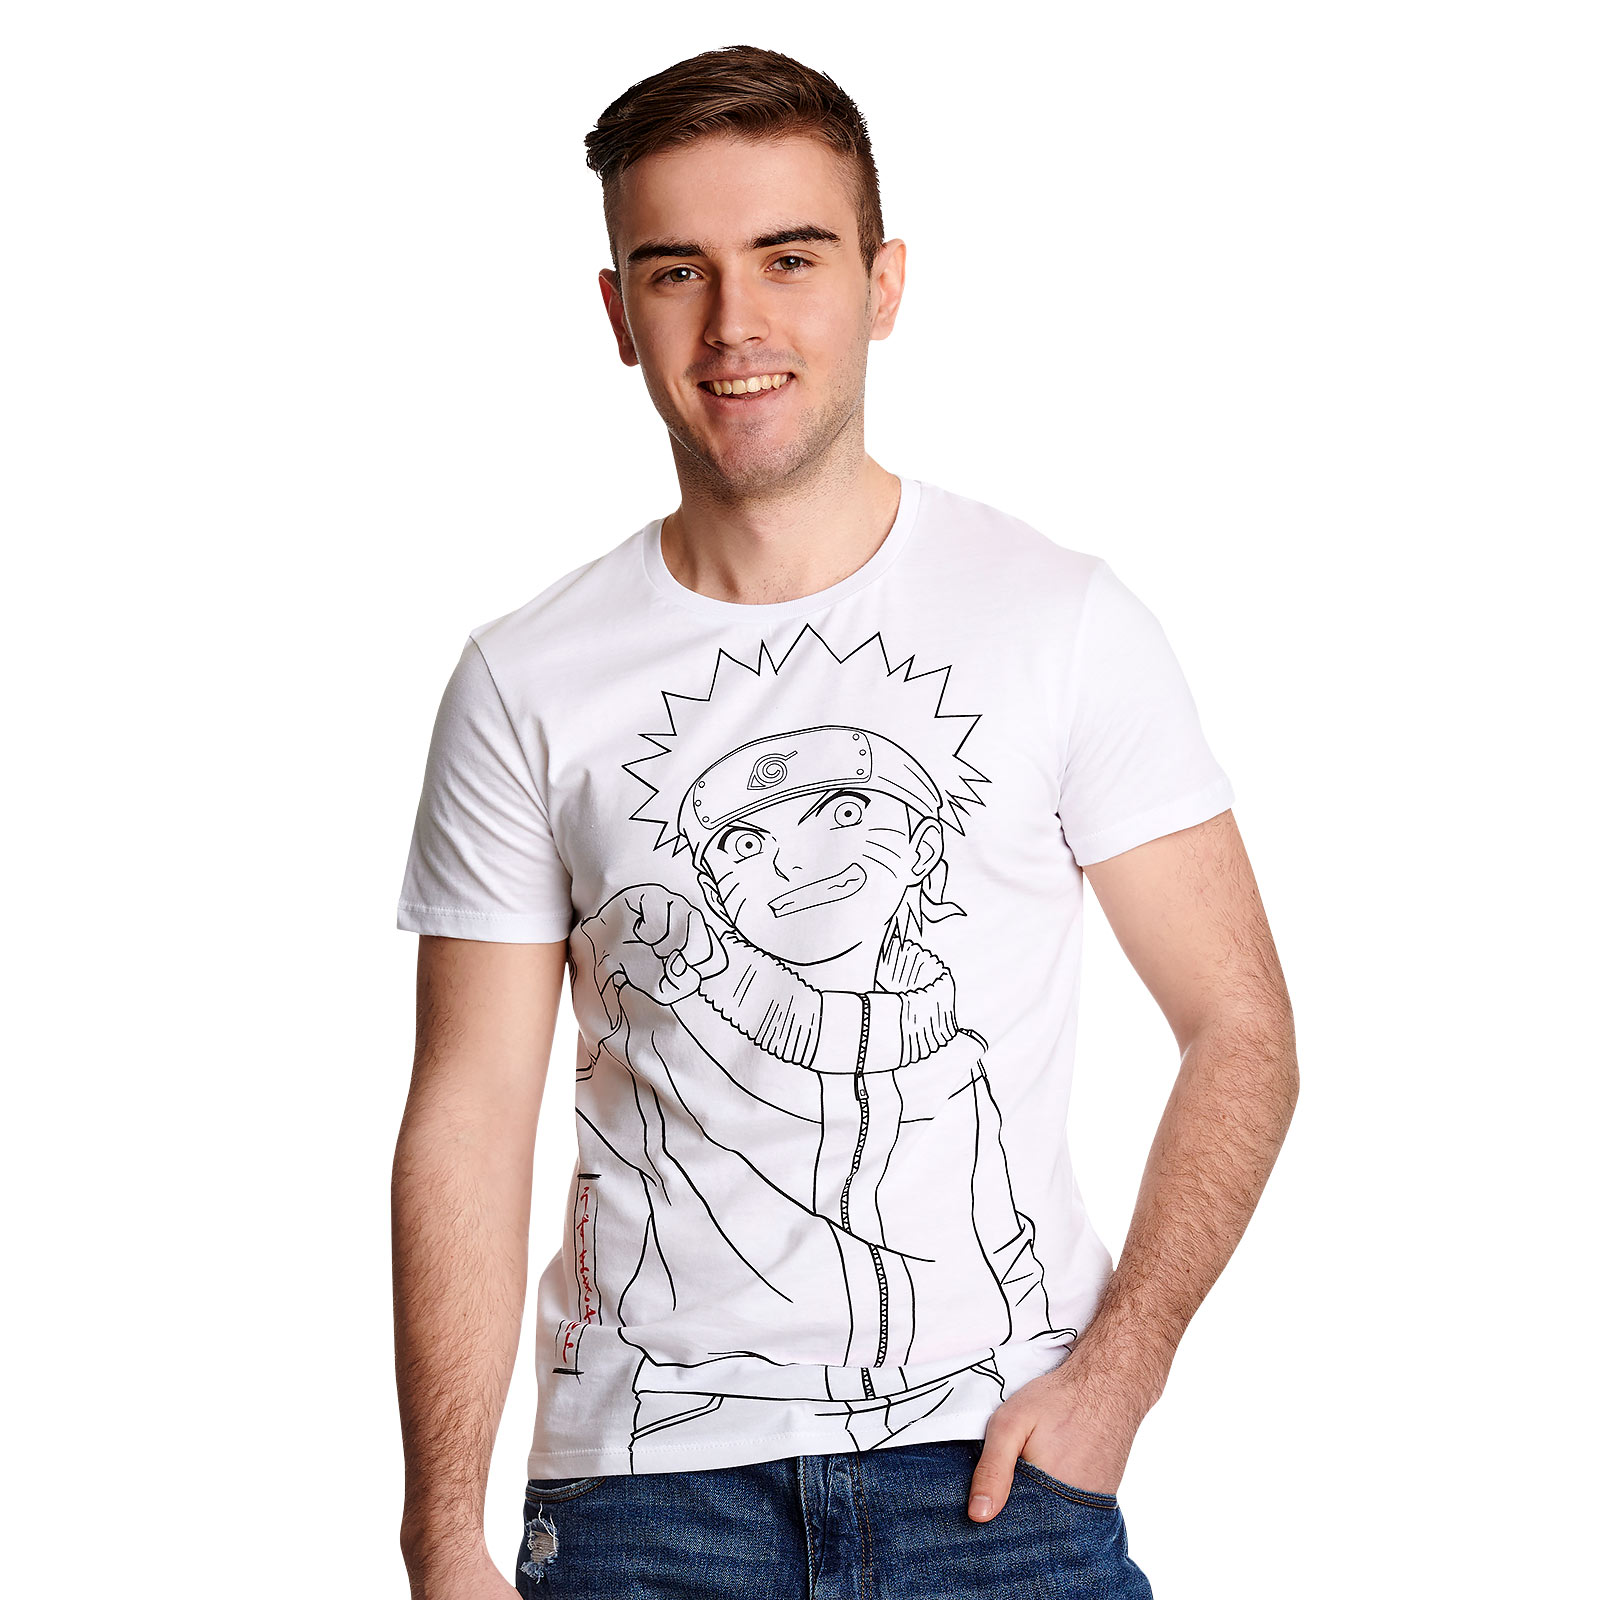 Naruto - Monochroom Schets T-shirt wit